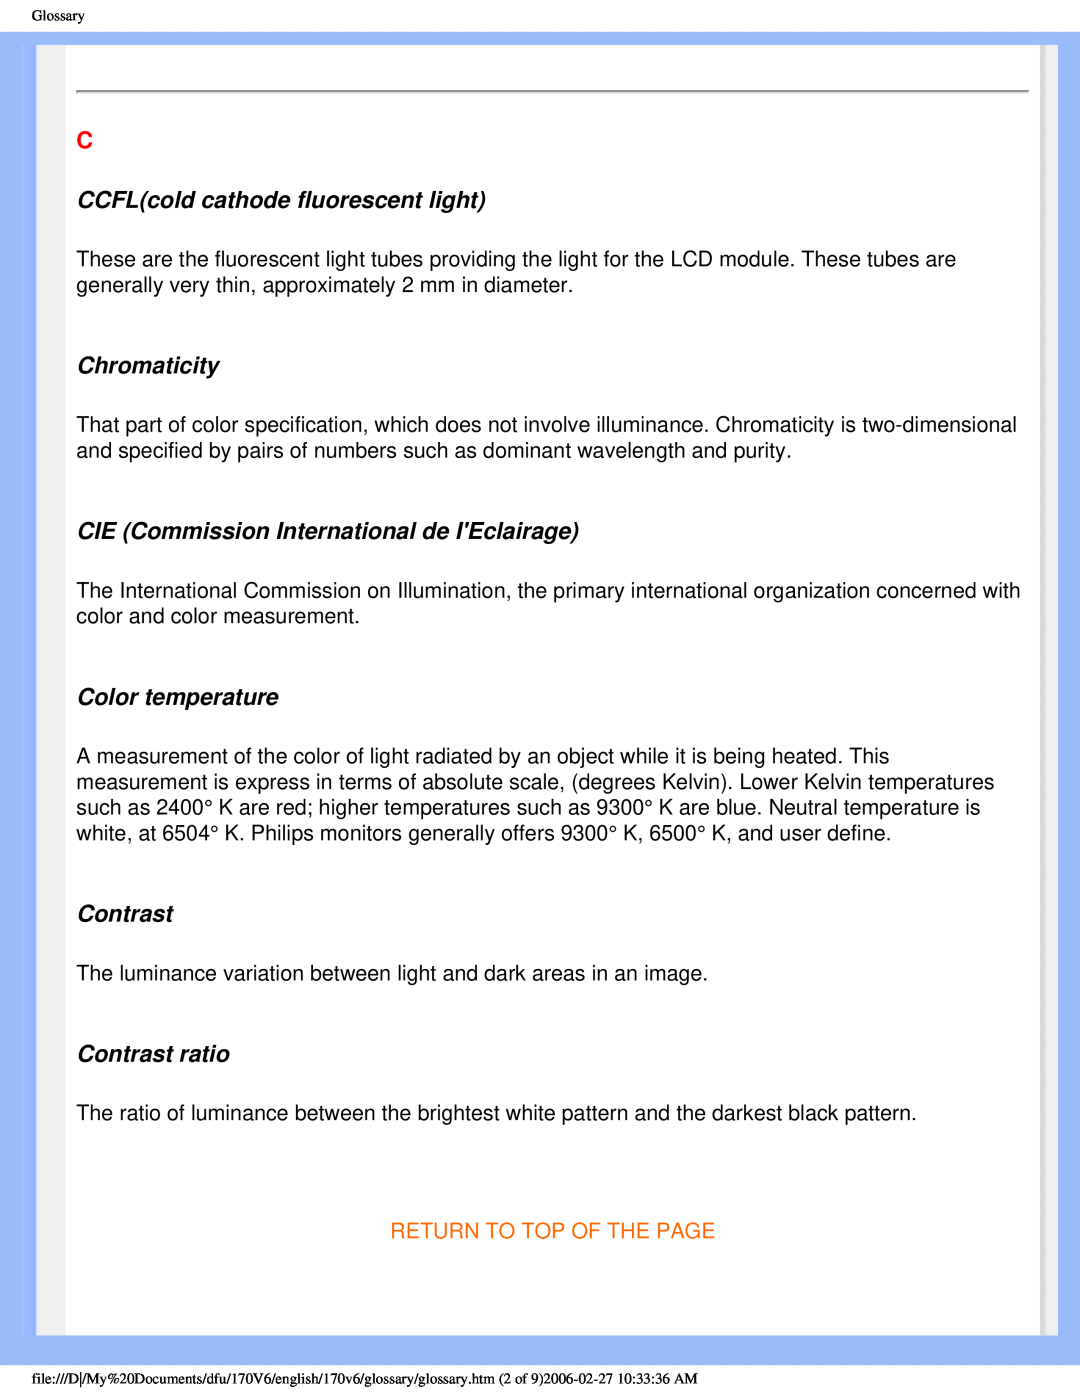 Philips 170V6 CCFLcold cathode fluorescent light, Chromaticity, CIE Commission International de IEclairage, Contrast 